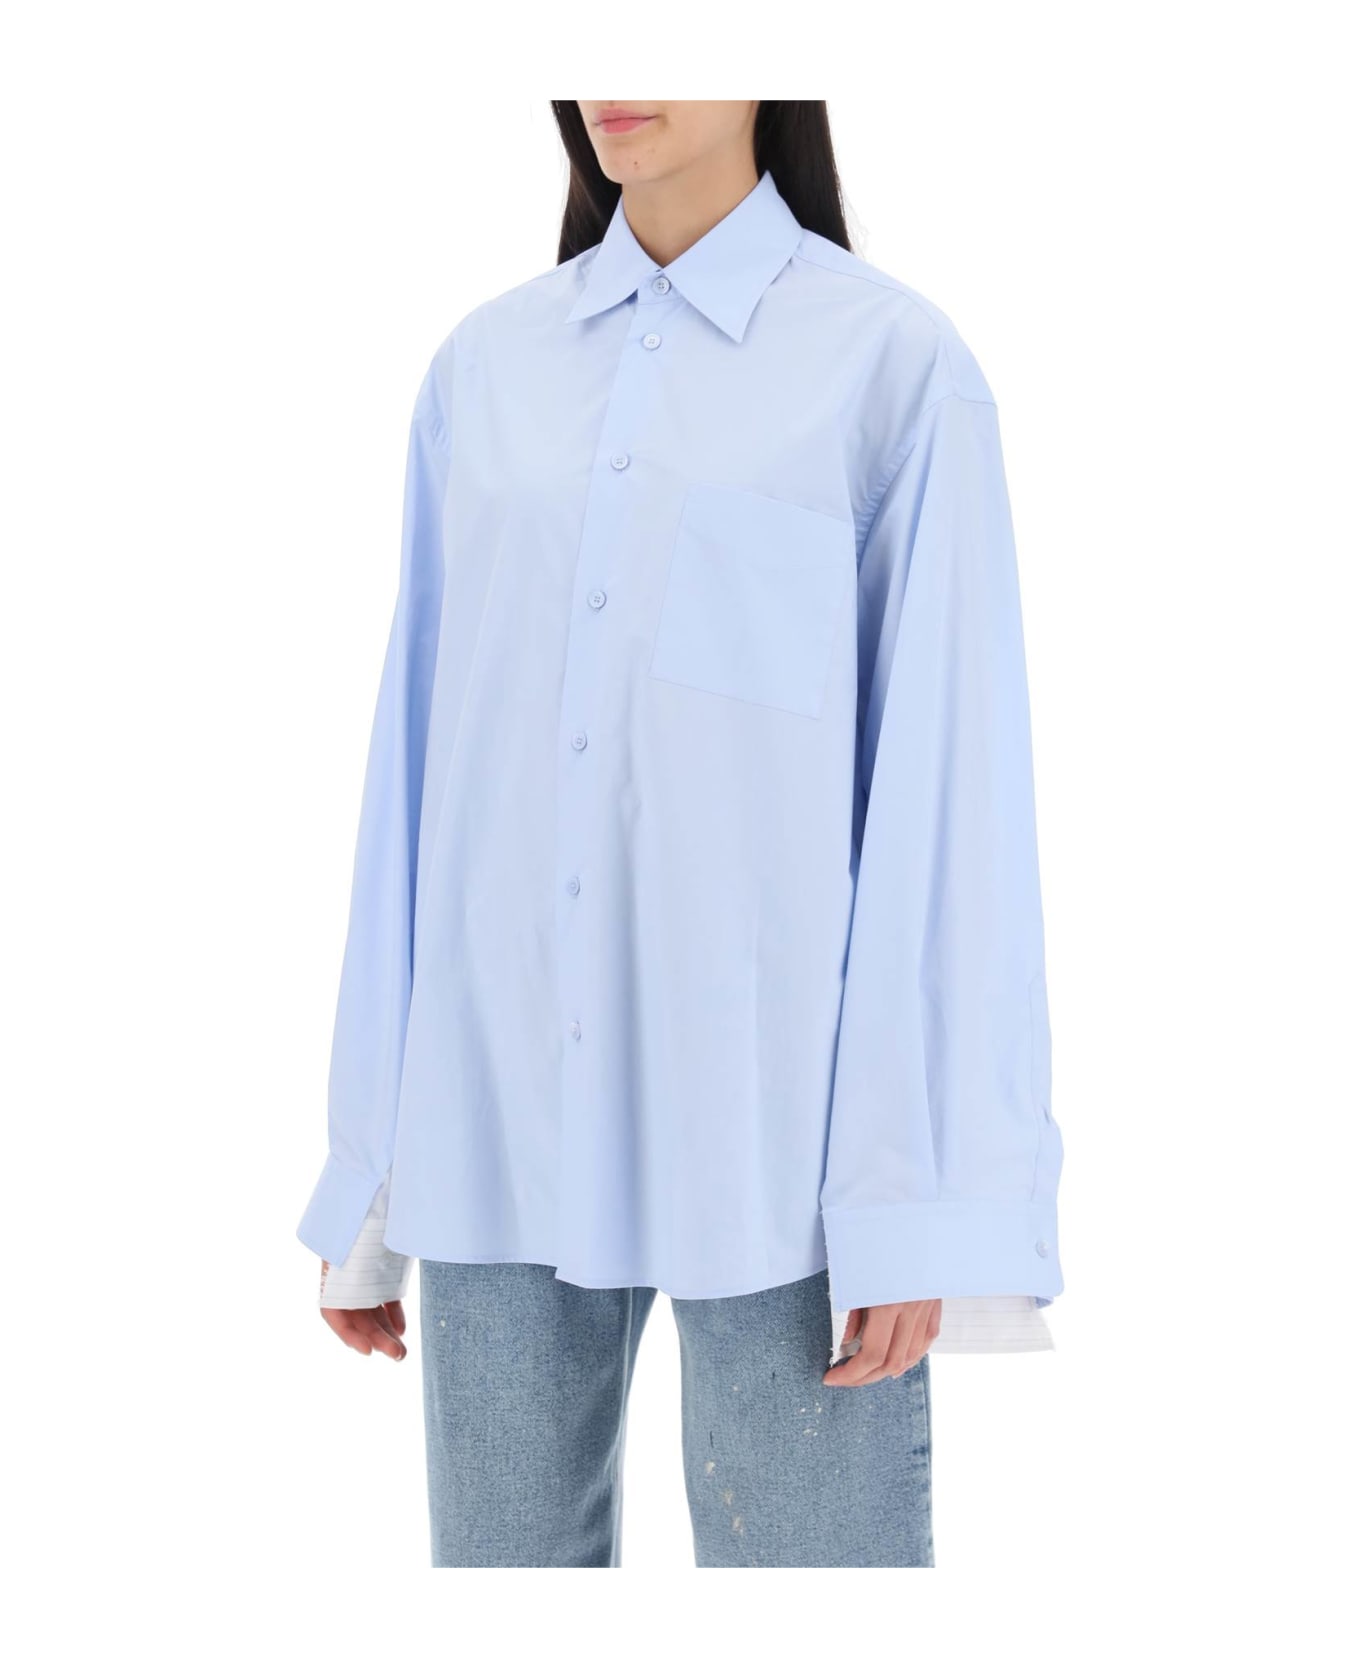 MM6 Maison Margiela Poplin Shirt With Striped Inserts - LIGHT BLUE (Light blue)